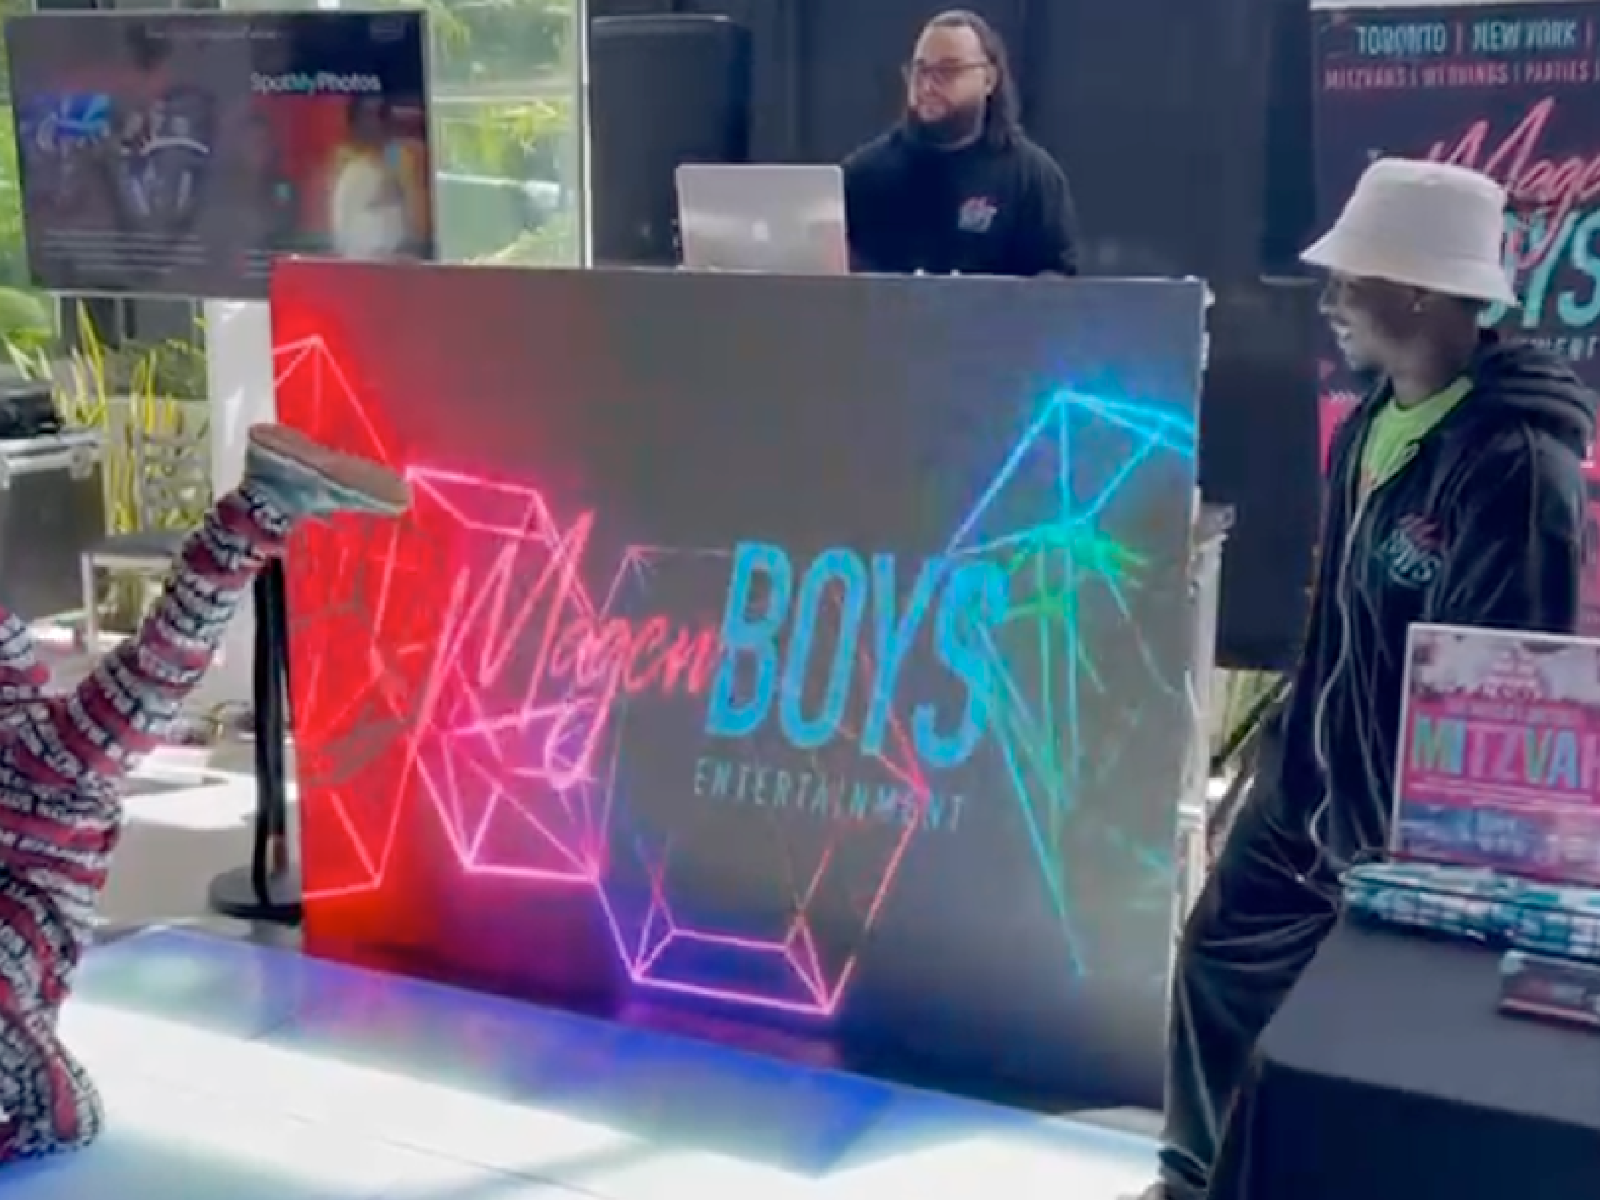 LED DJ Booth